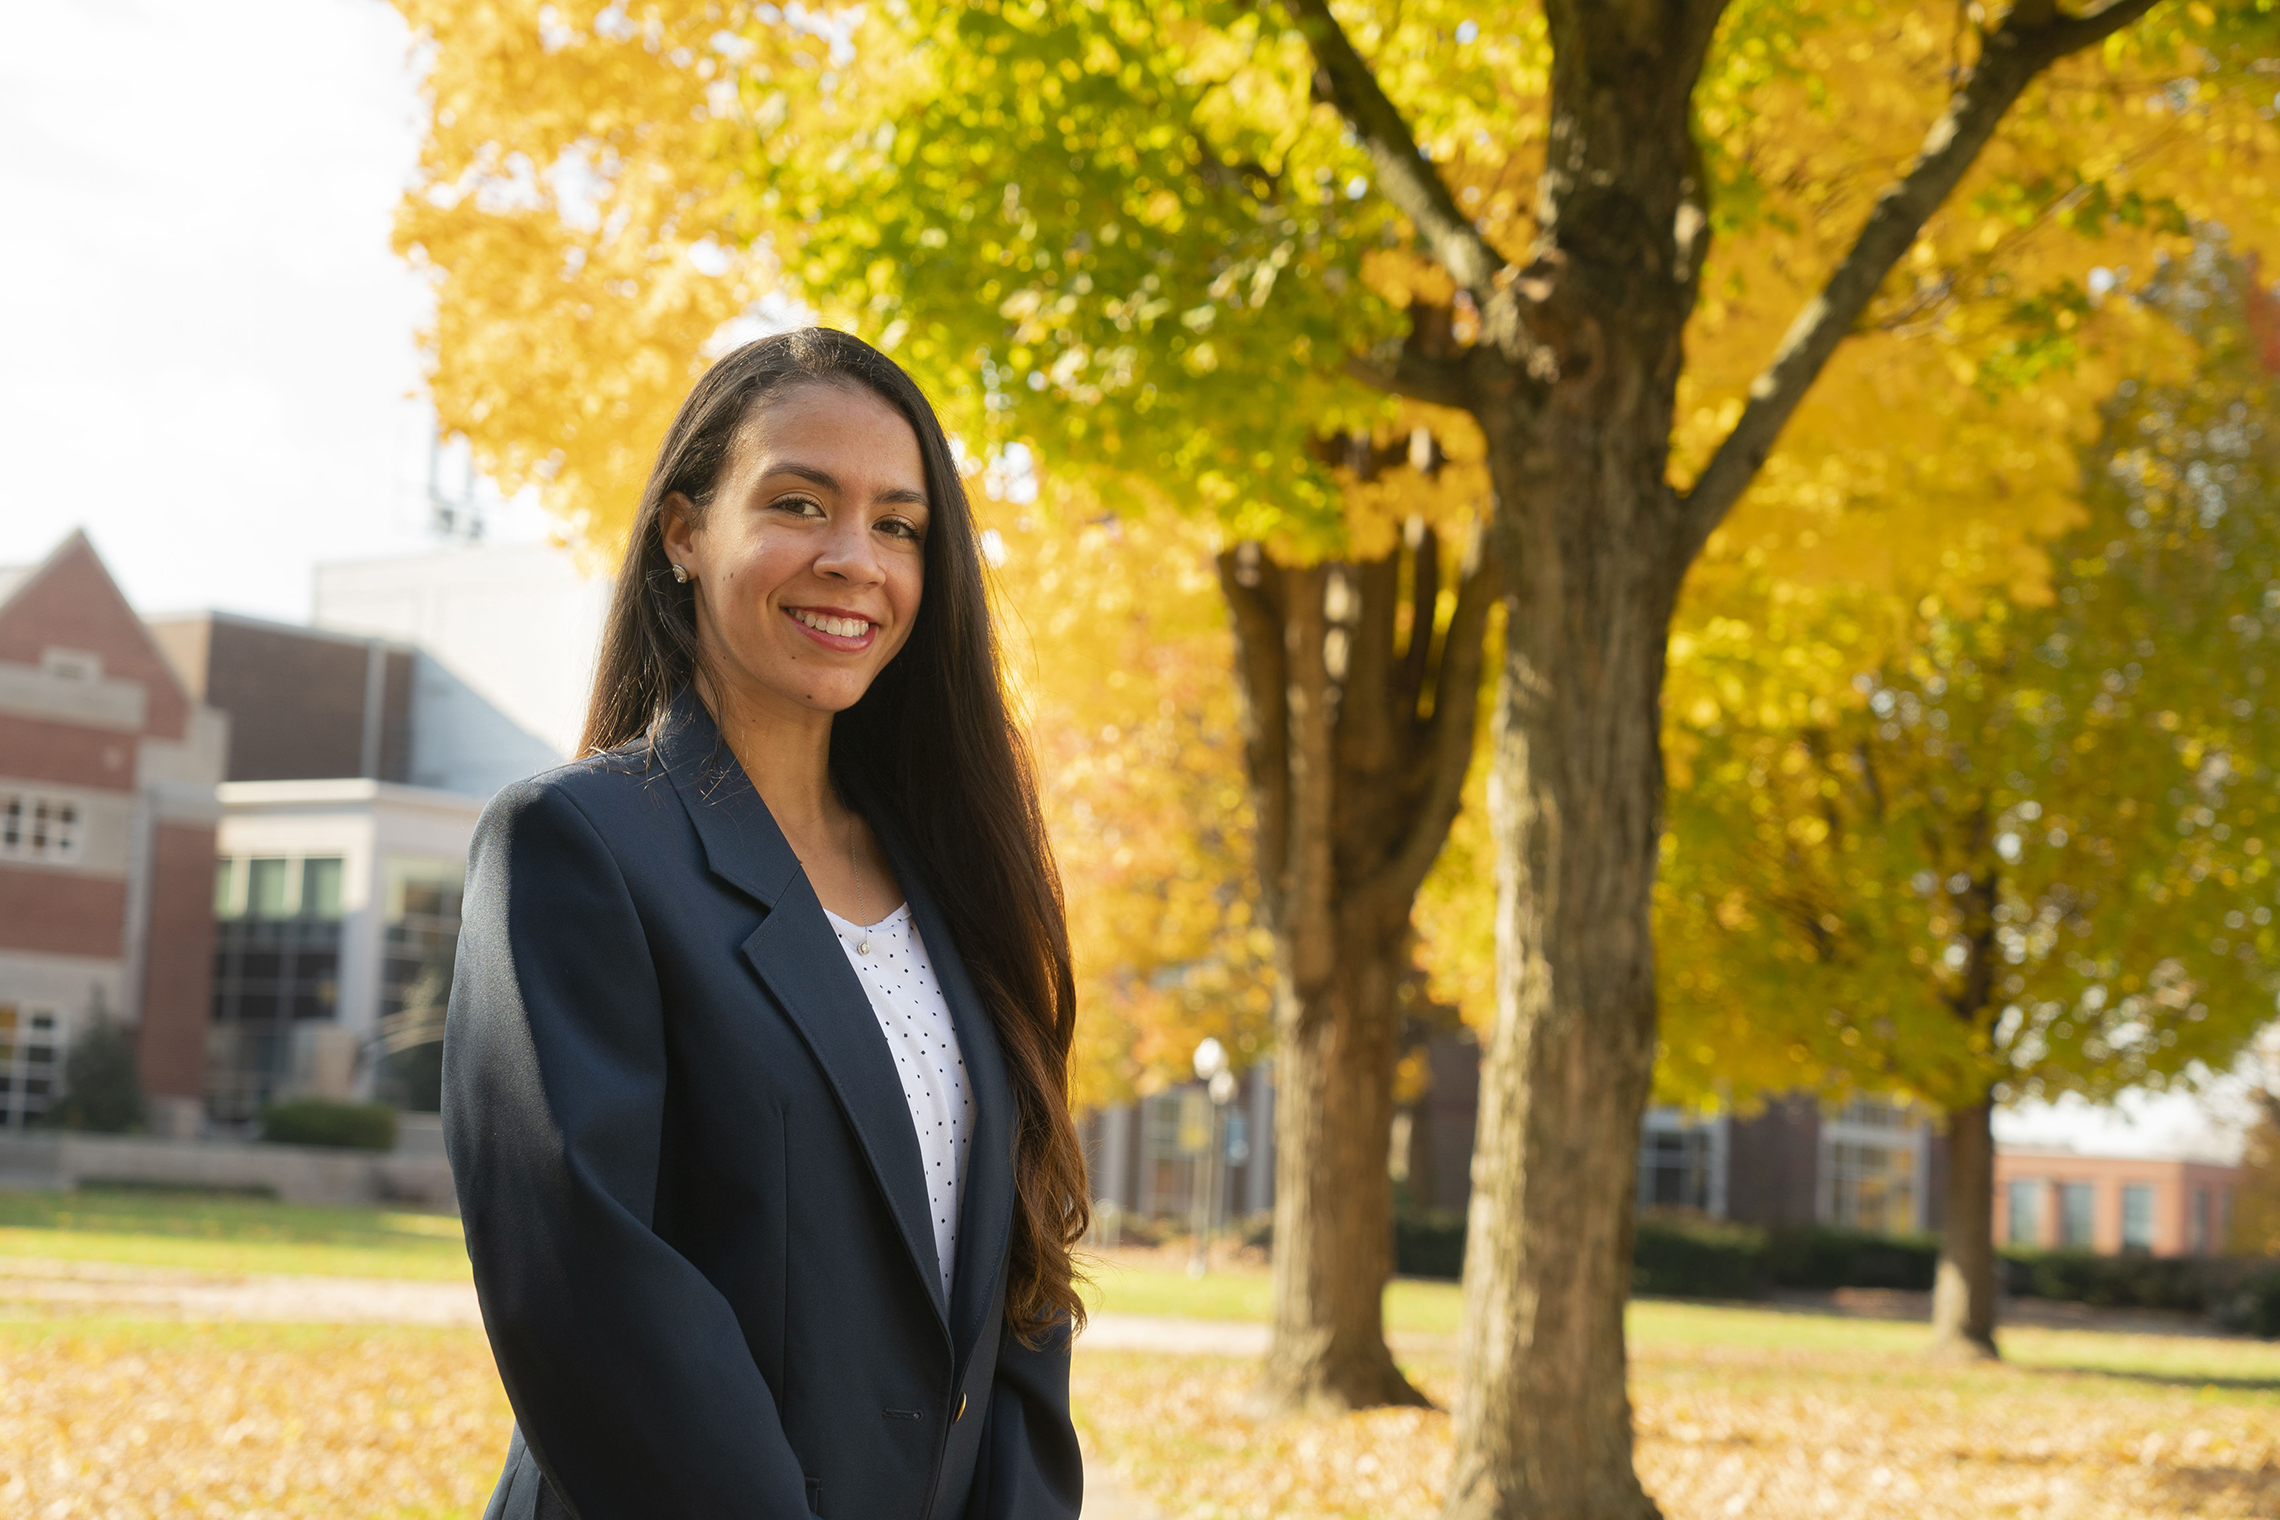 Female student in blazer smiling on autumn campus